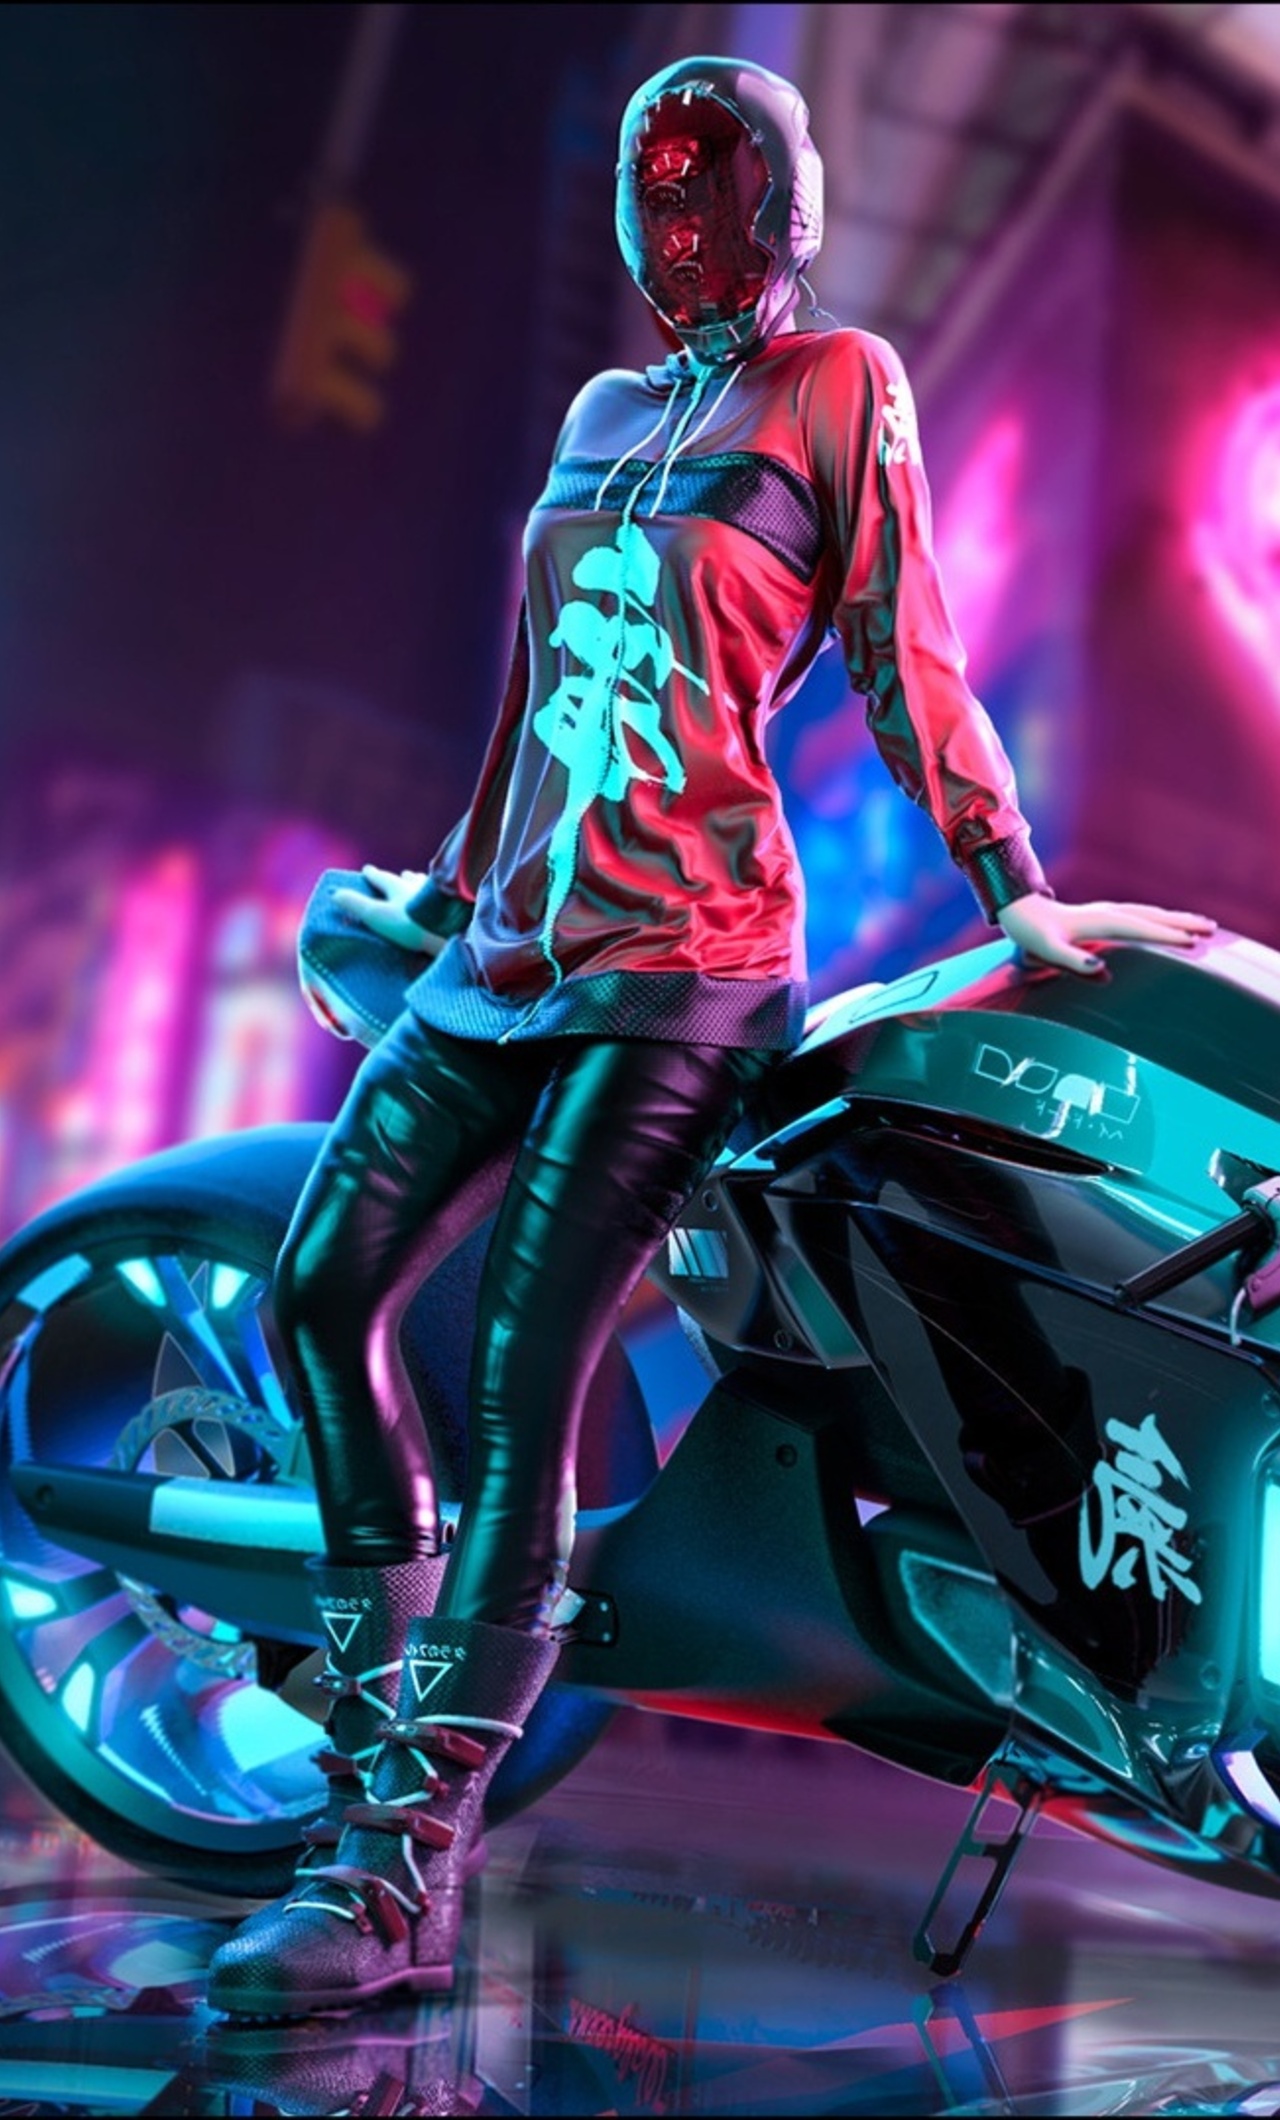 Cyberpunk Girl Futuristic Motorcycle
 Wallpapers